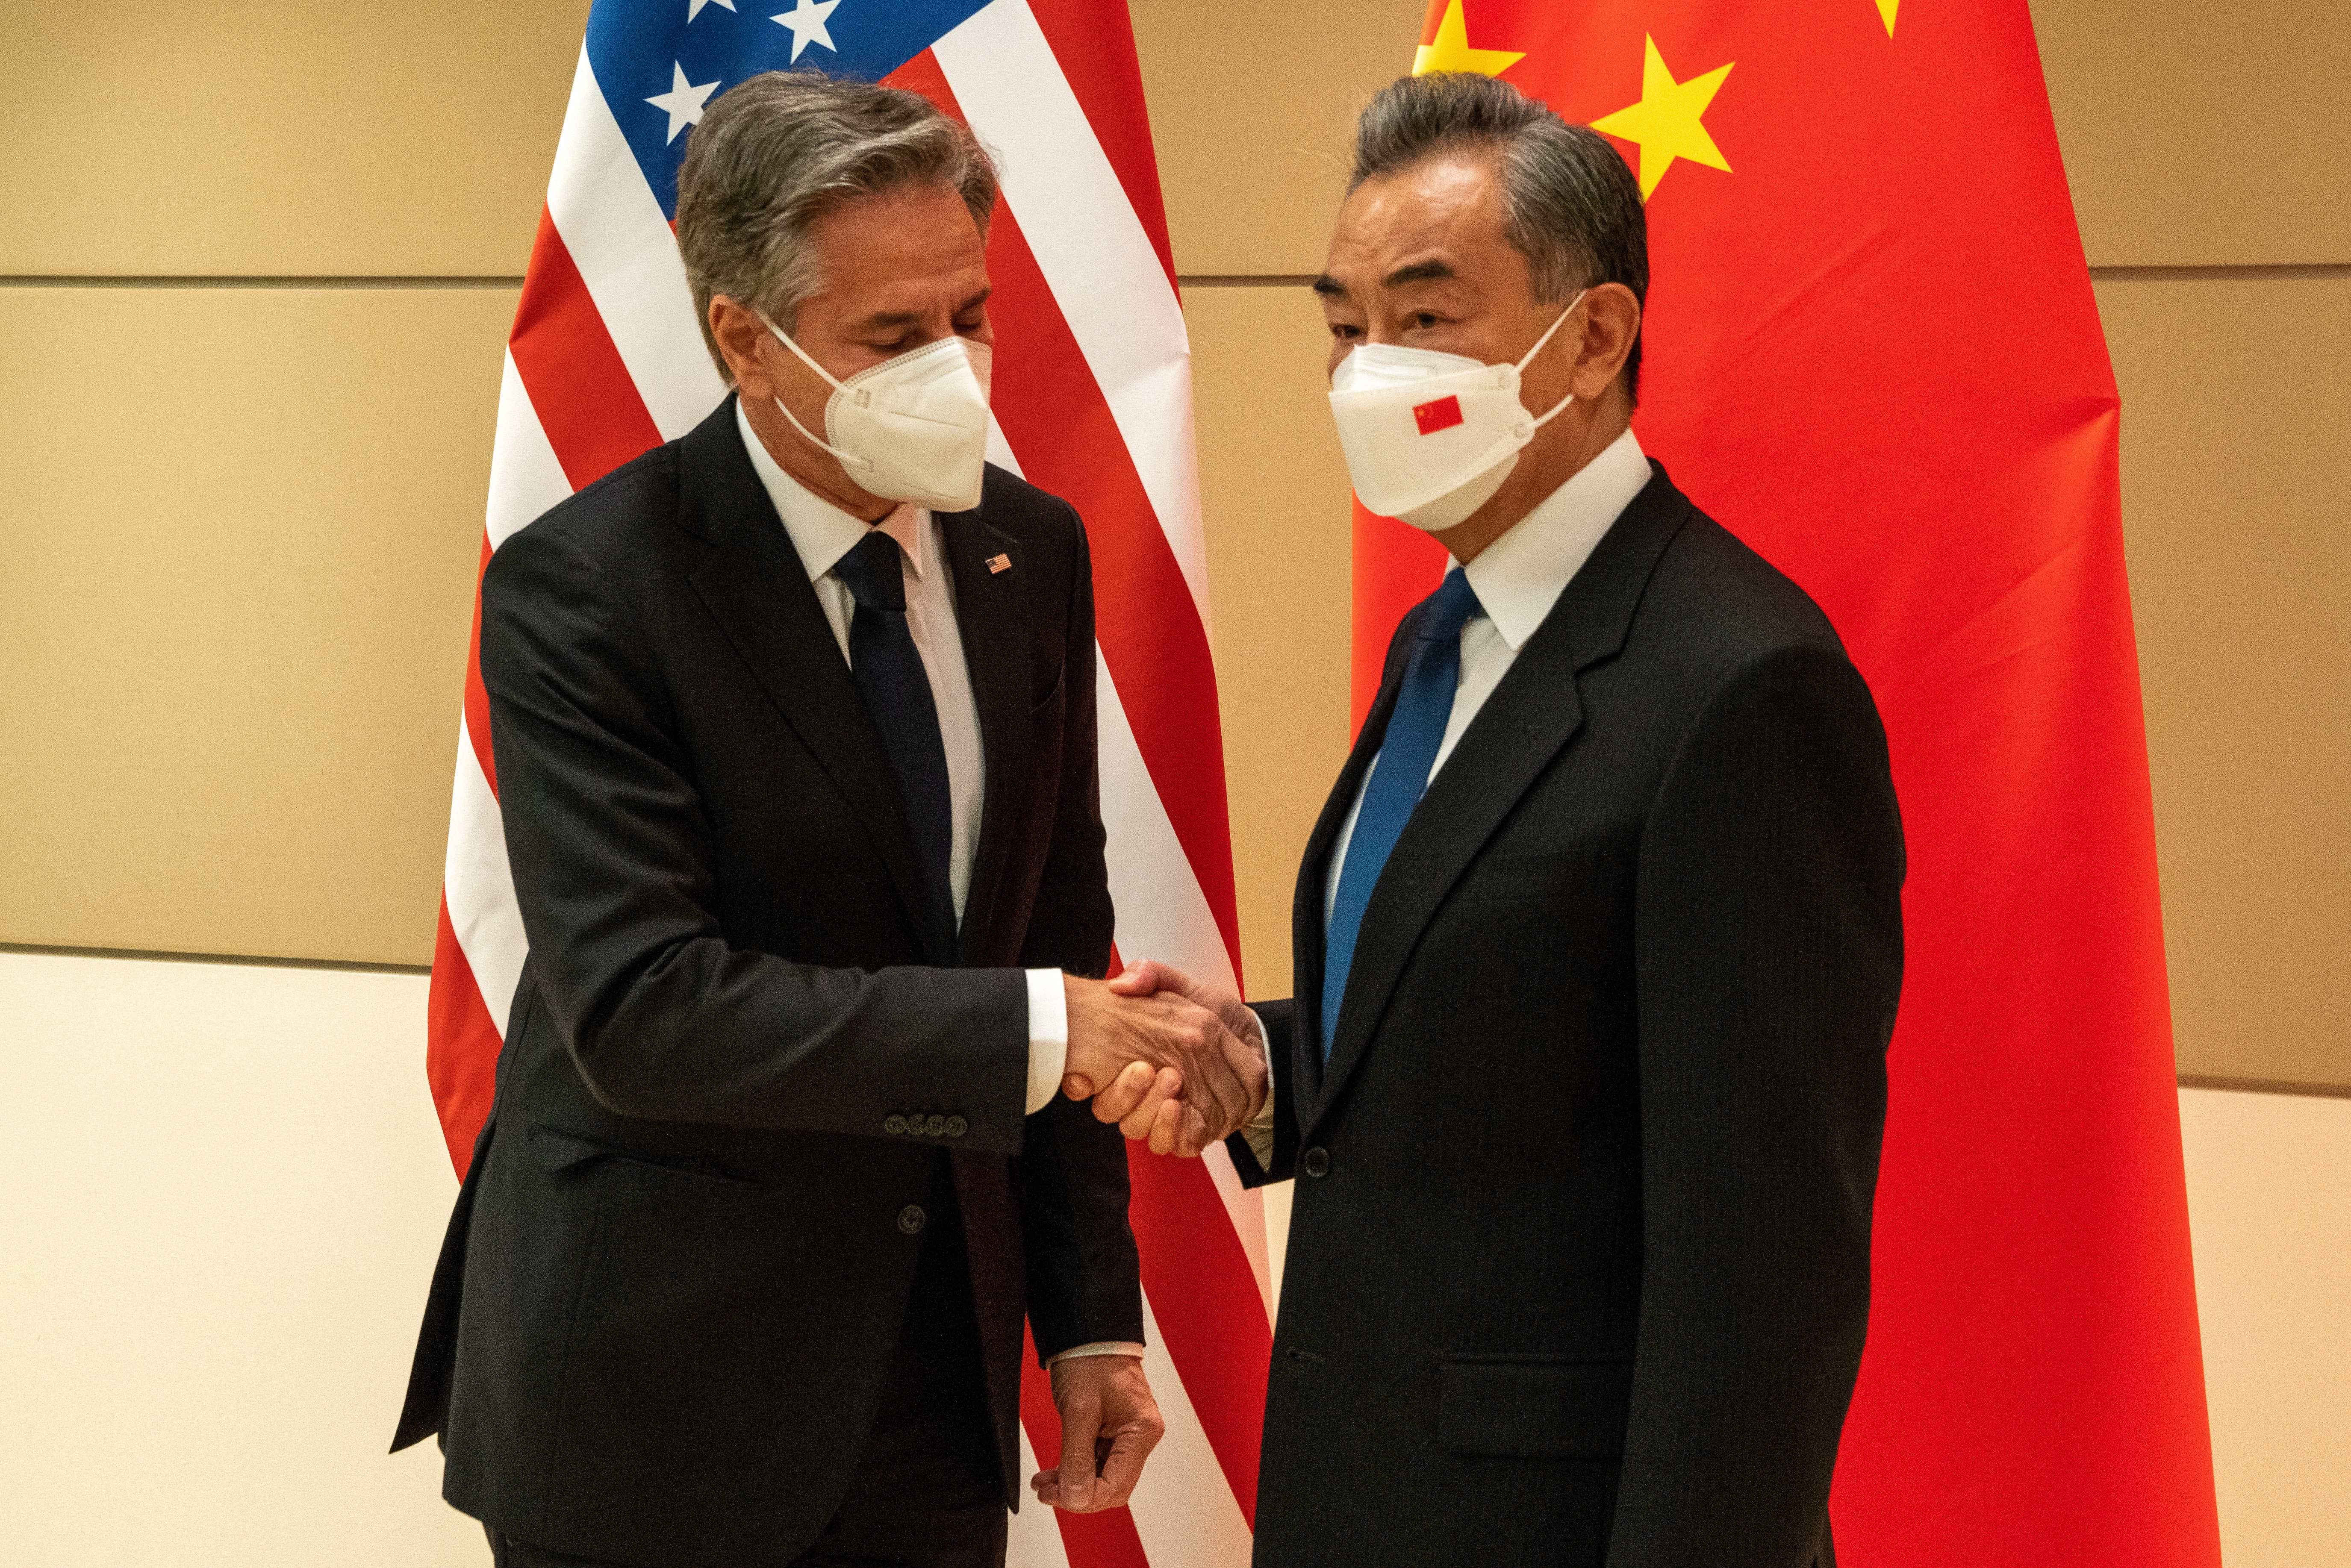 Antony Blinken and Wang Yi's handshake in New York (REUTERS / David 'Dee' Delgado)